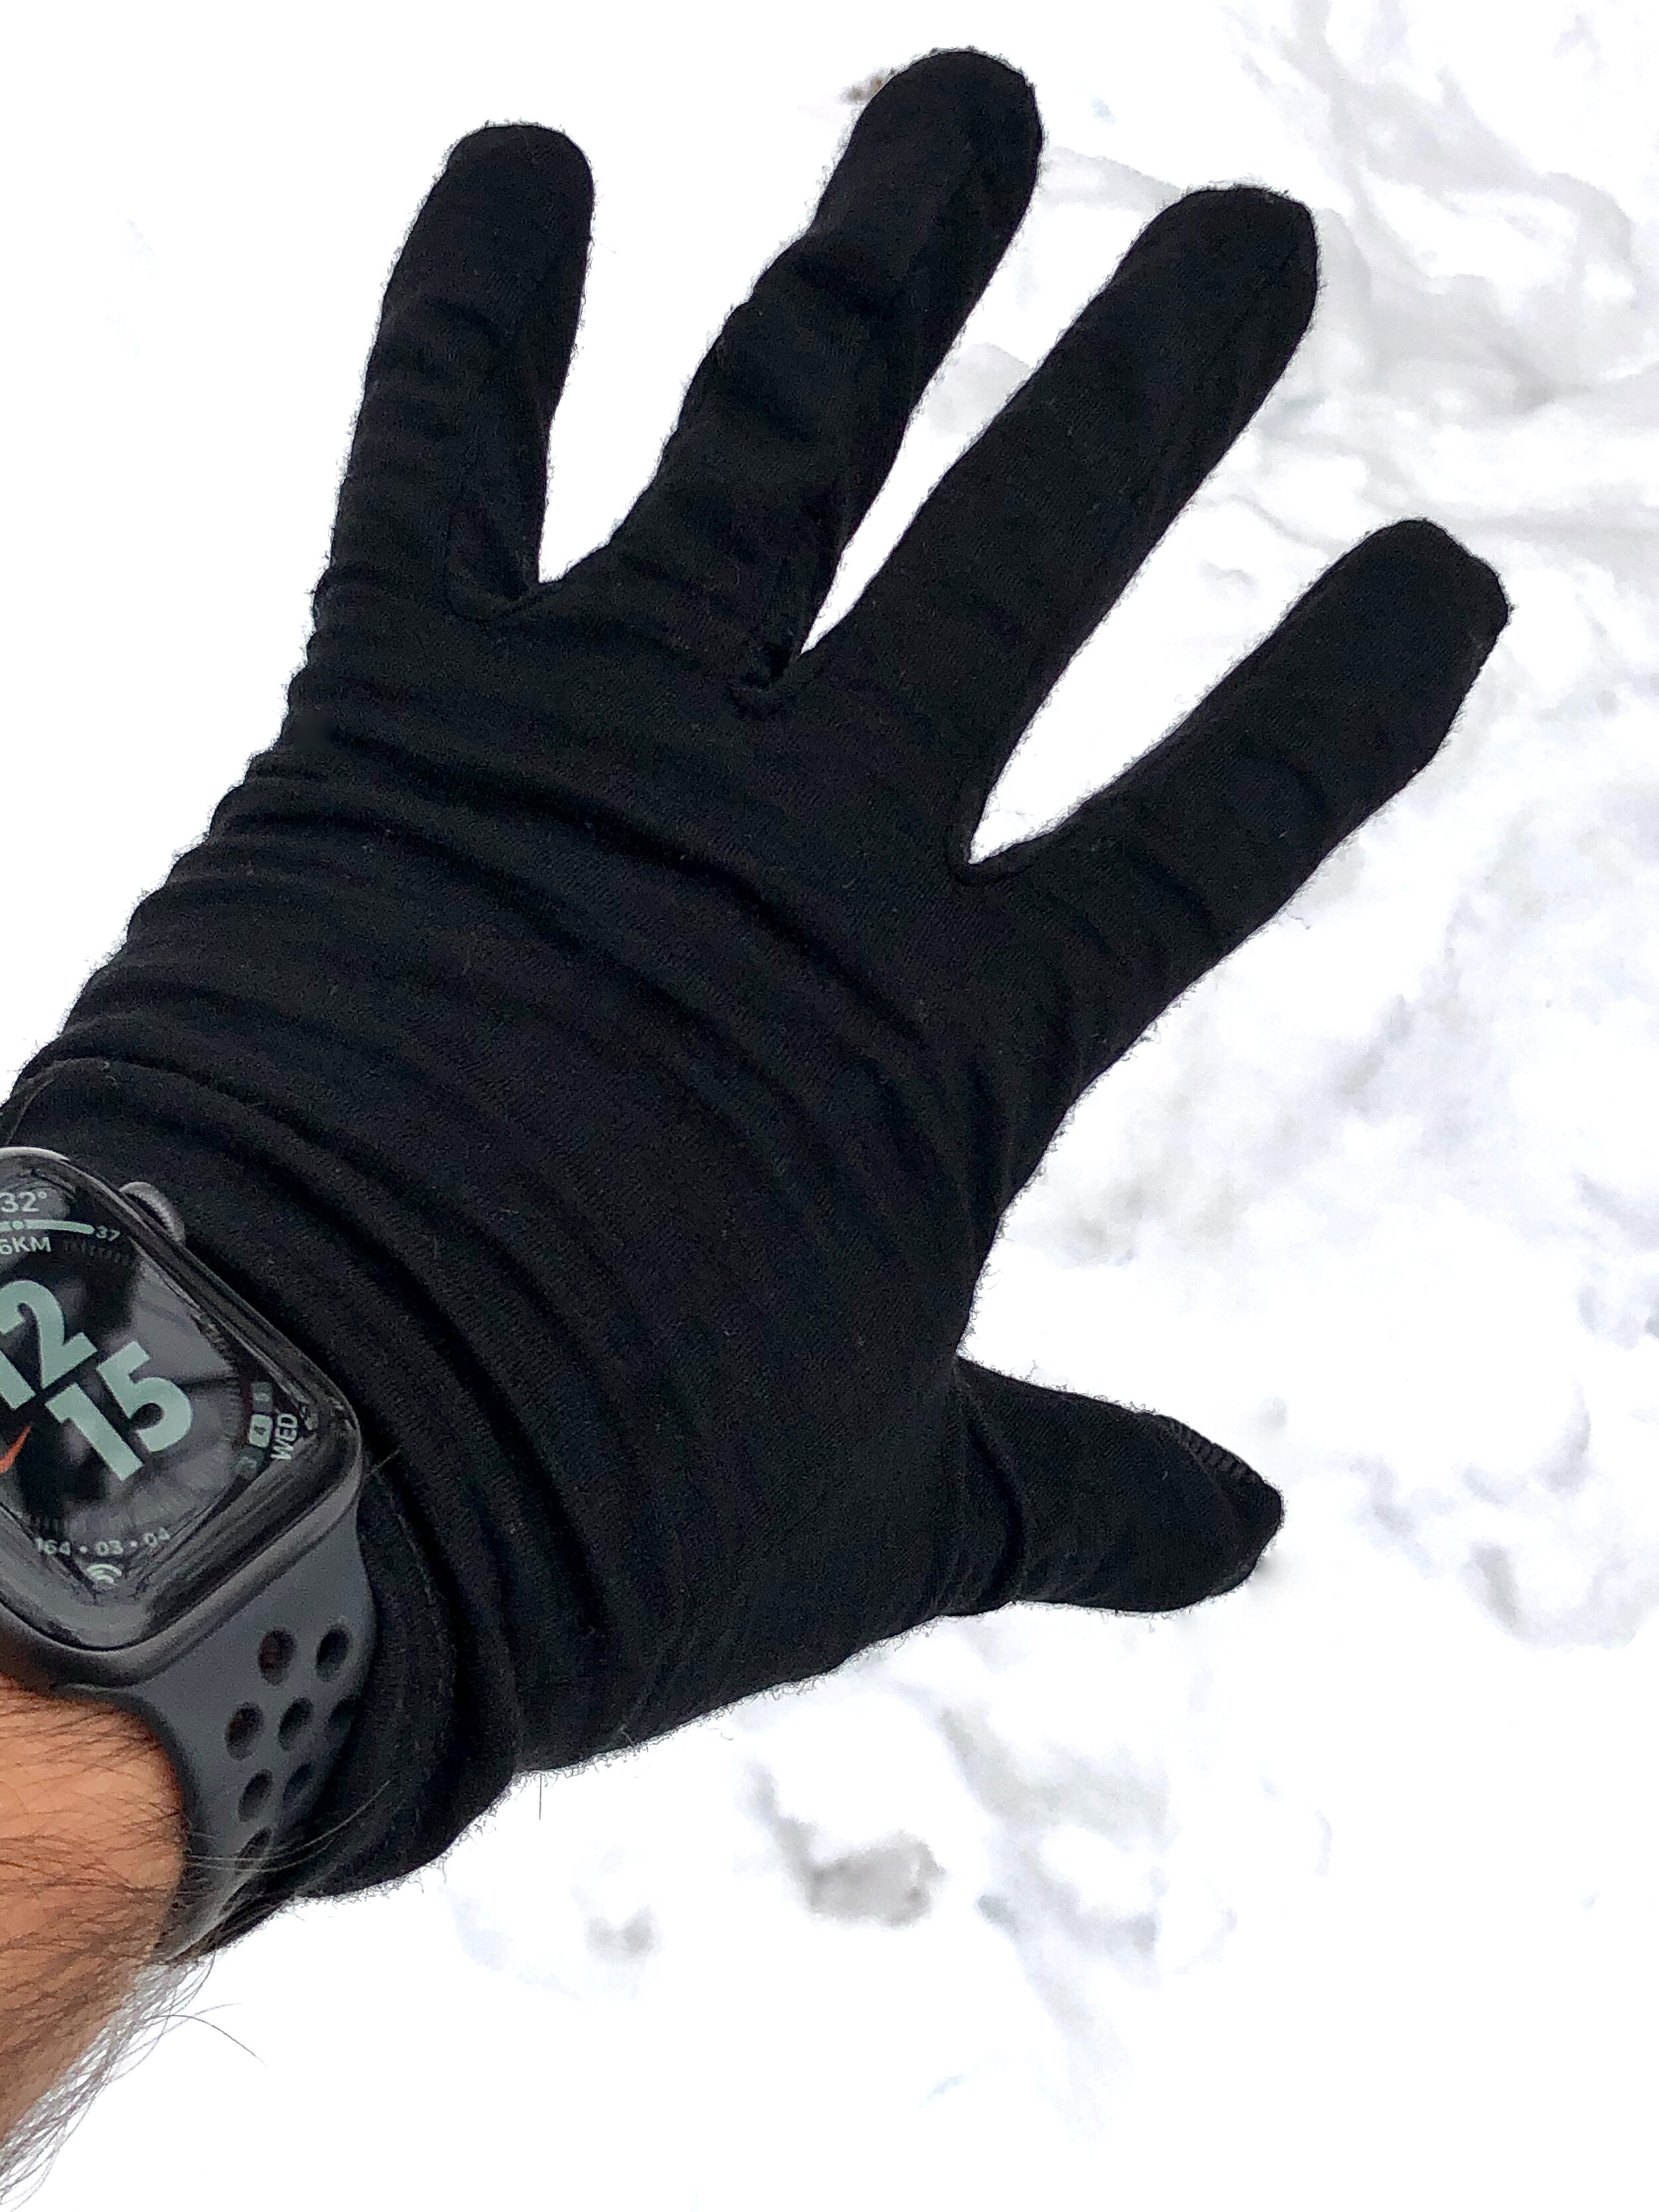 Gear: Smartwool Merino 150 Gloves — Stephen Hallgren